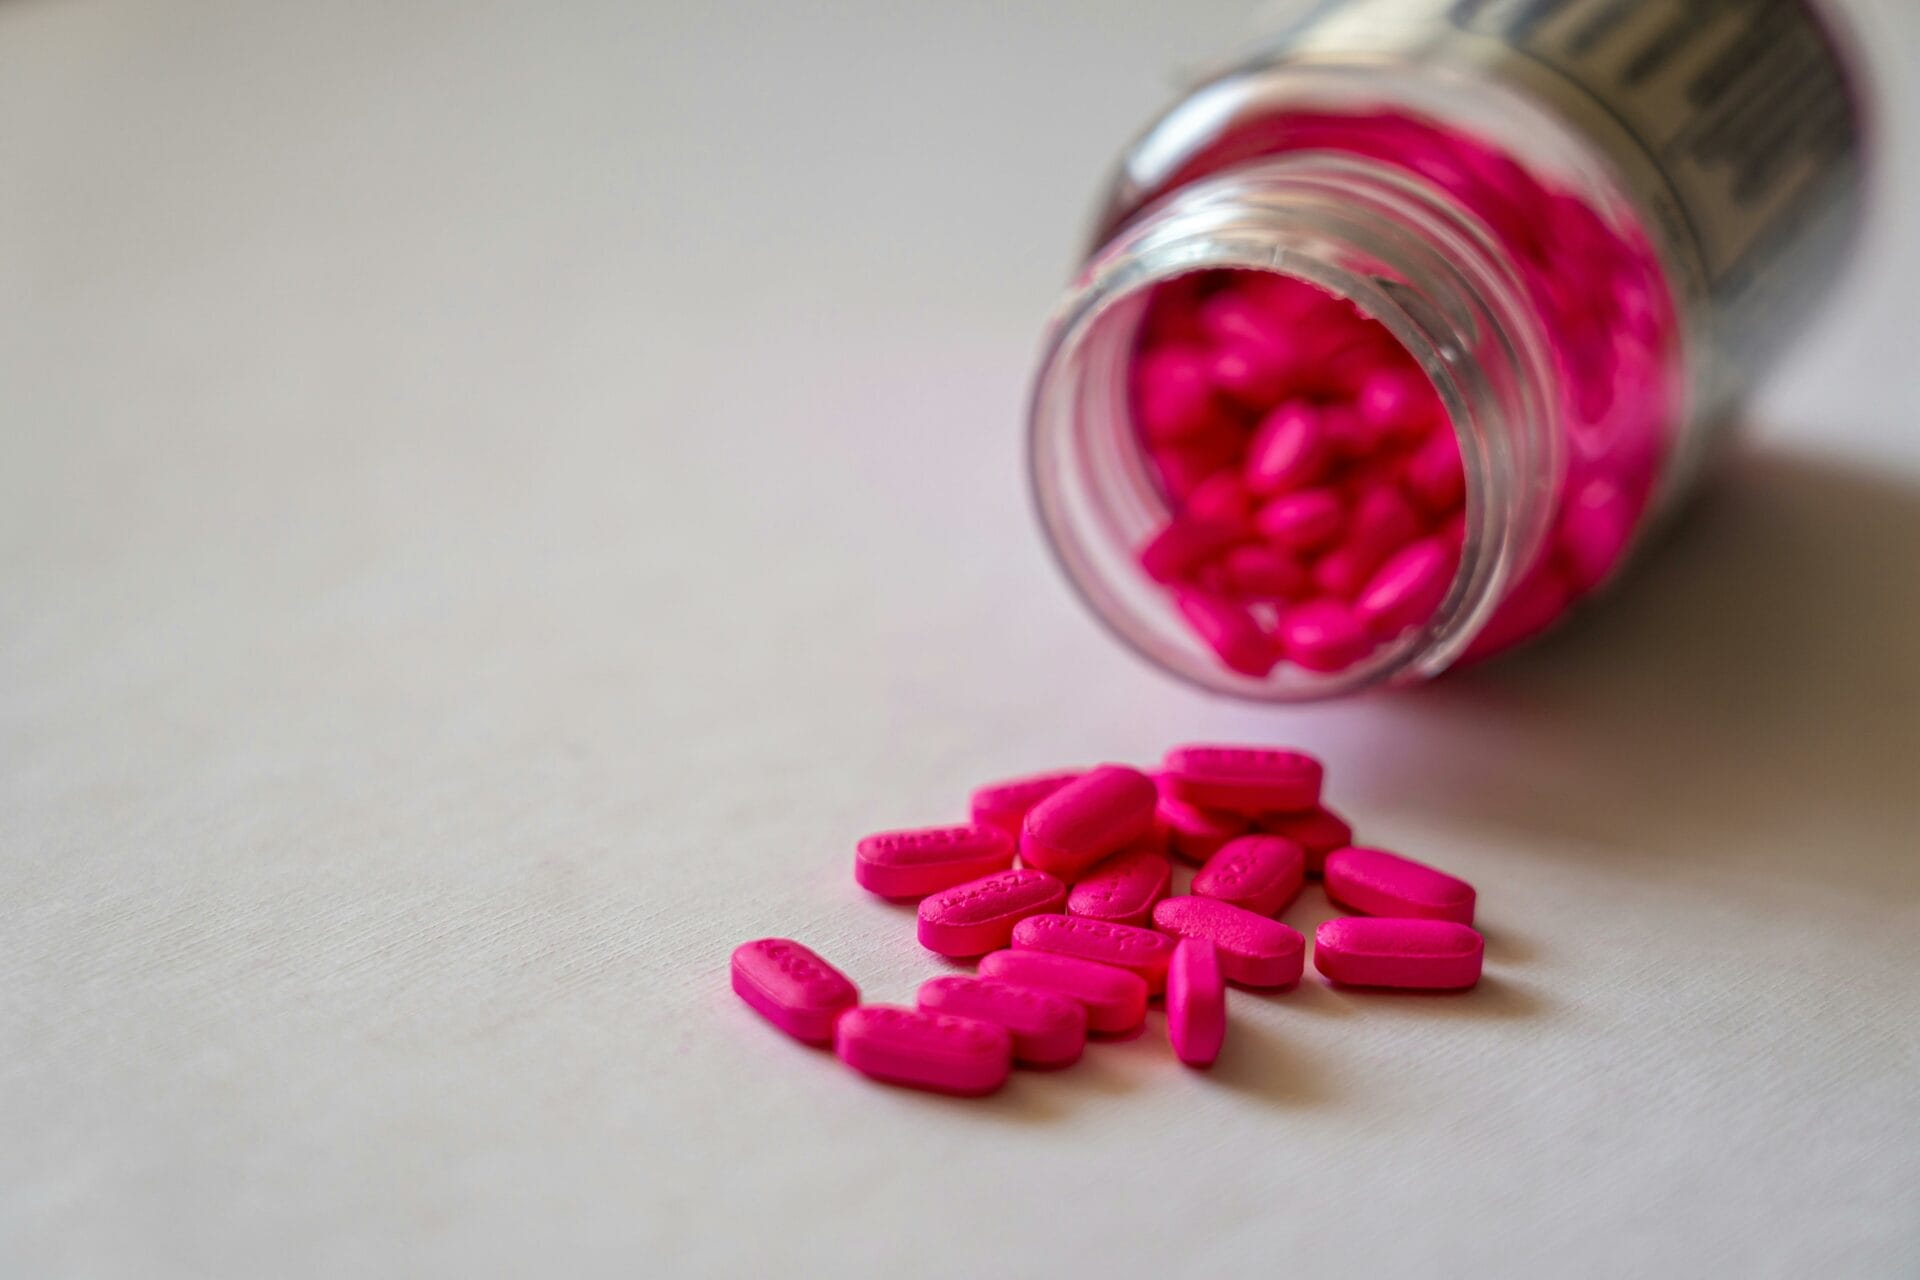 antihistamine pink pill for allergy reaction